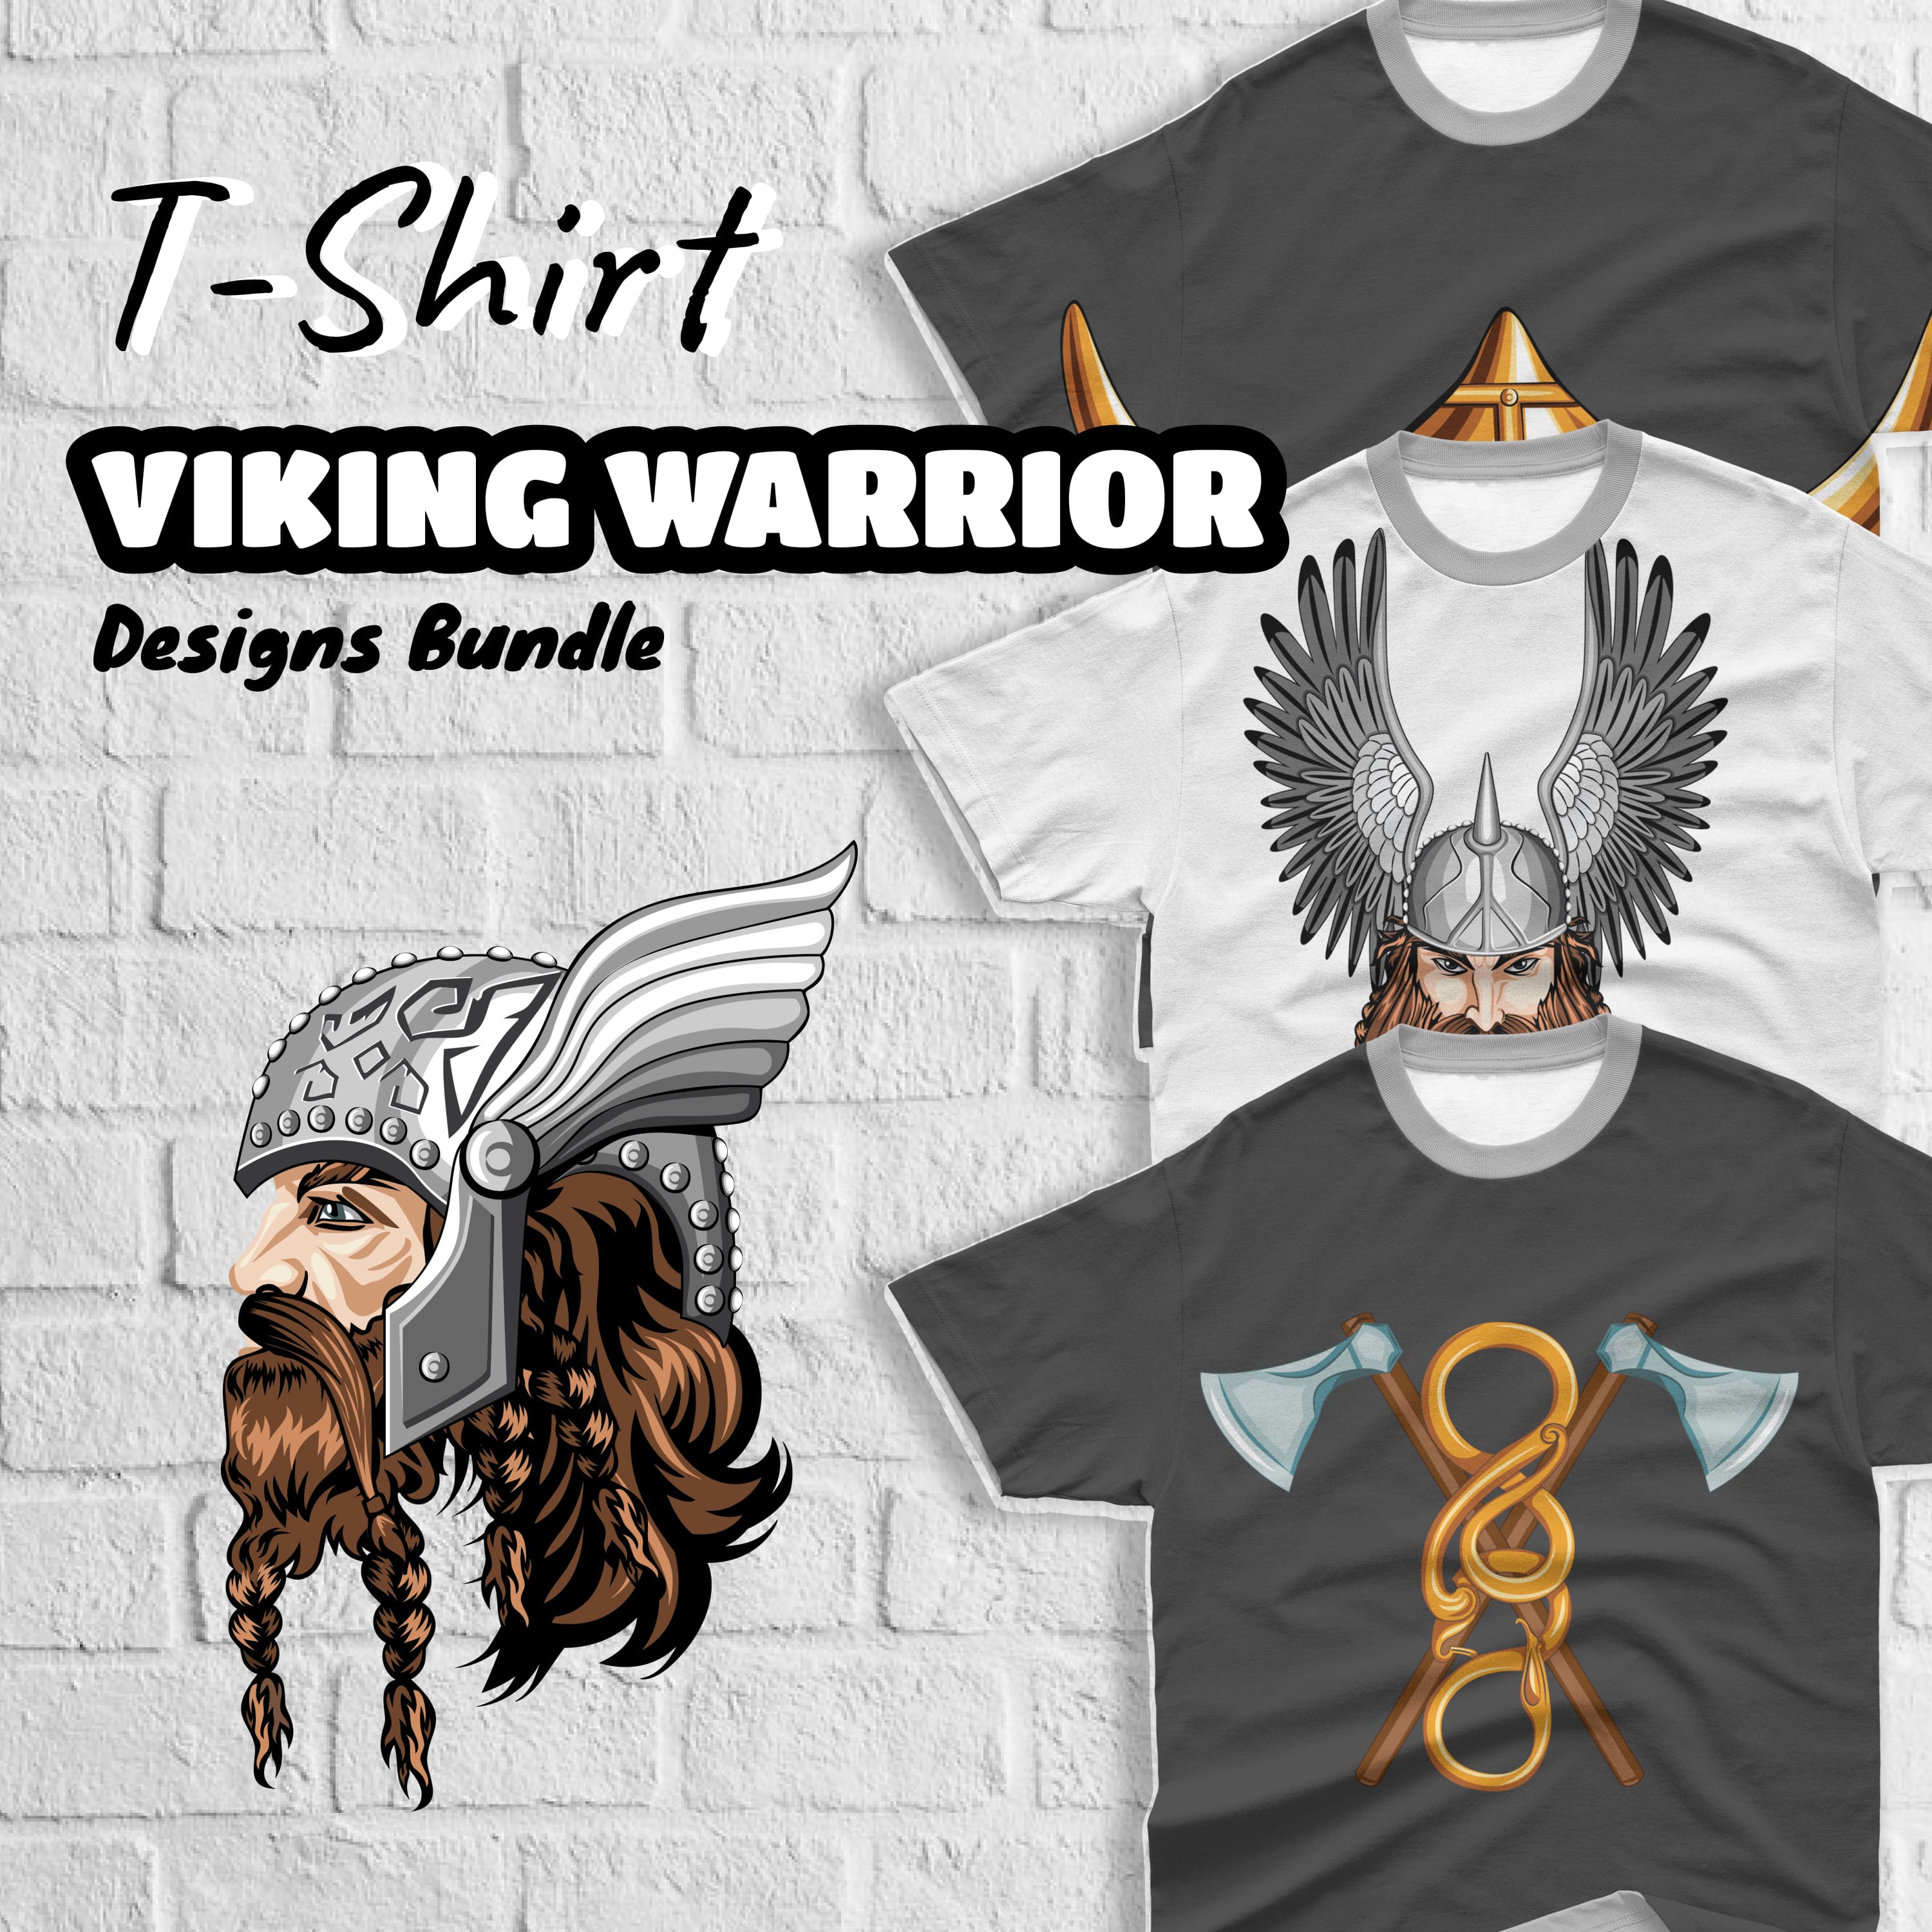 viking warrior SVG T-shirt Designs Bundle.